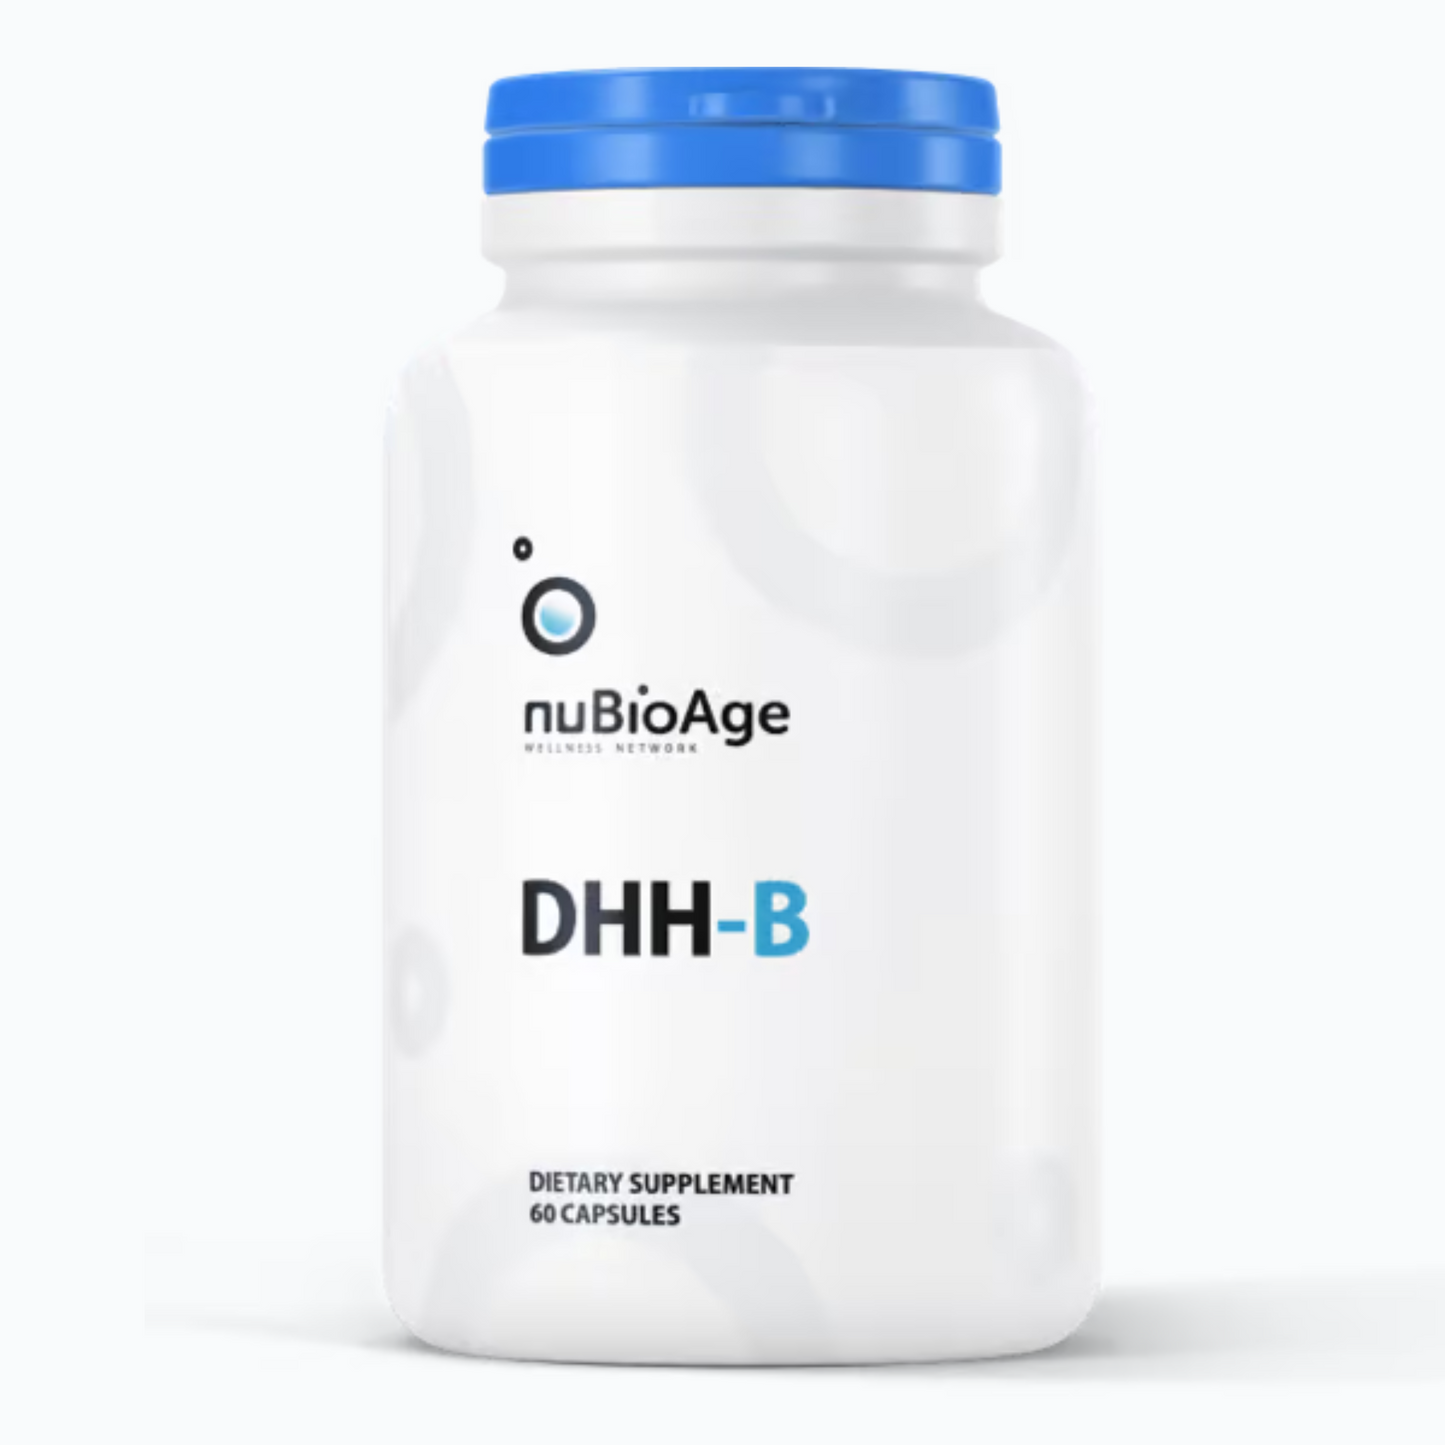 DHHB nuBioAge Supplement